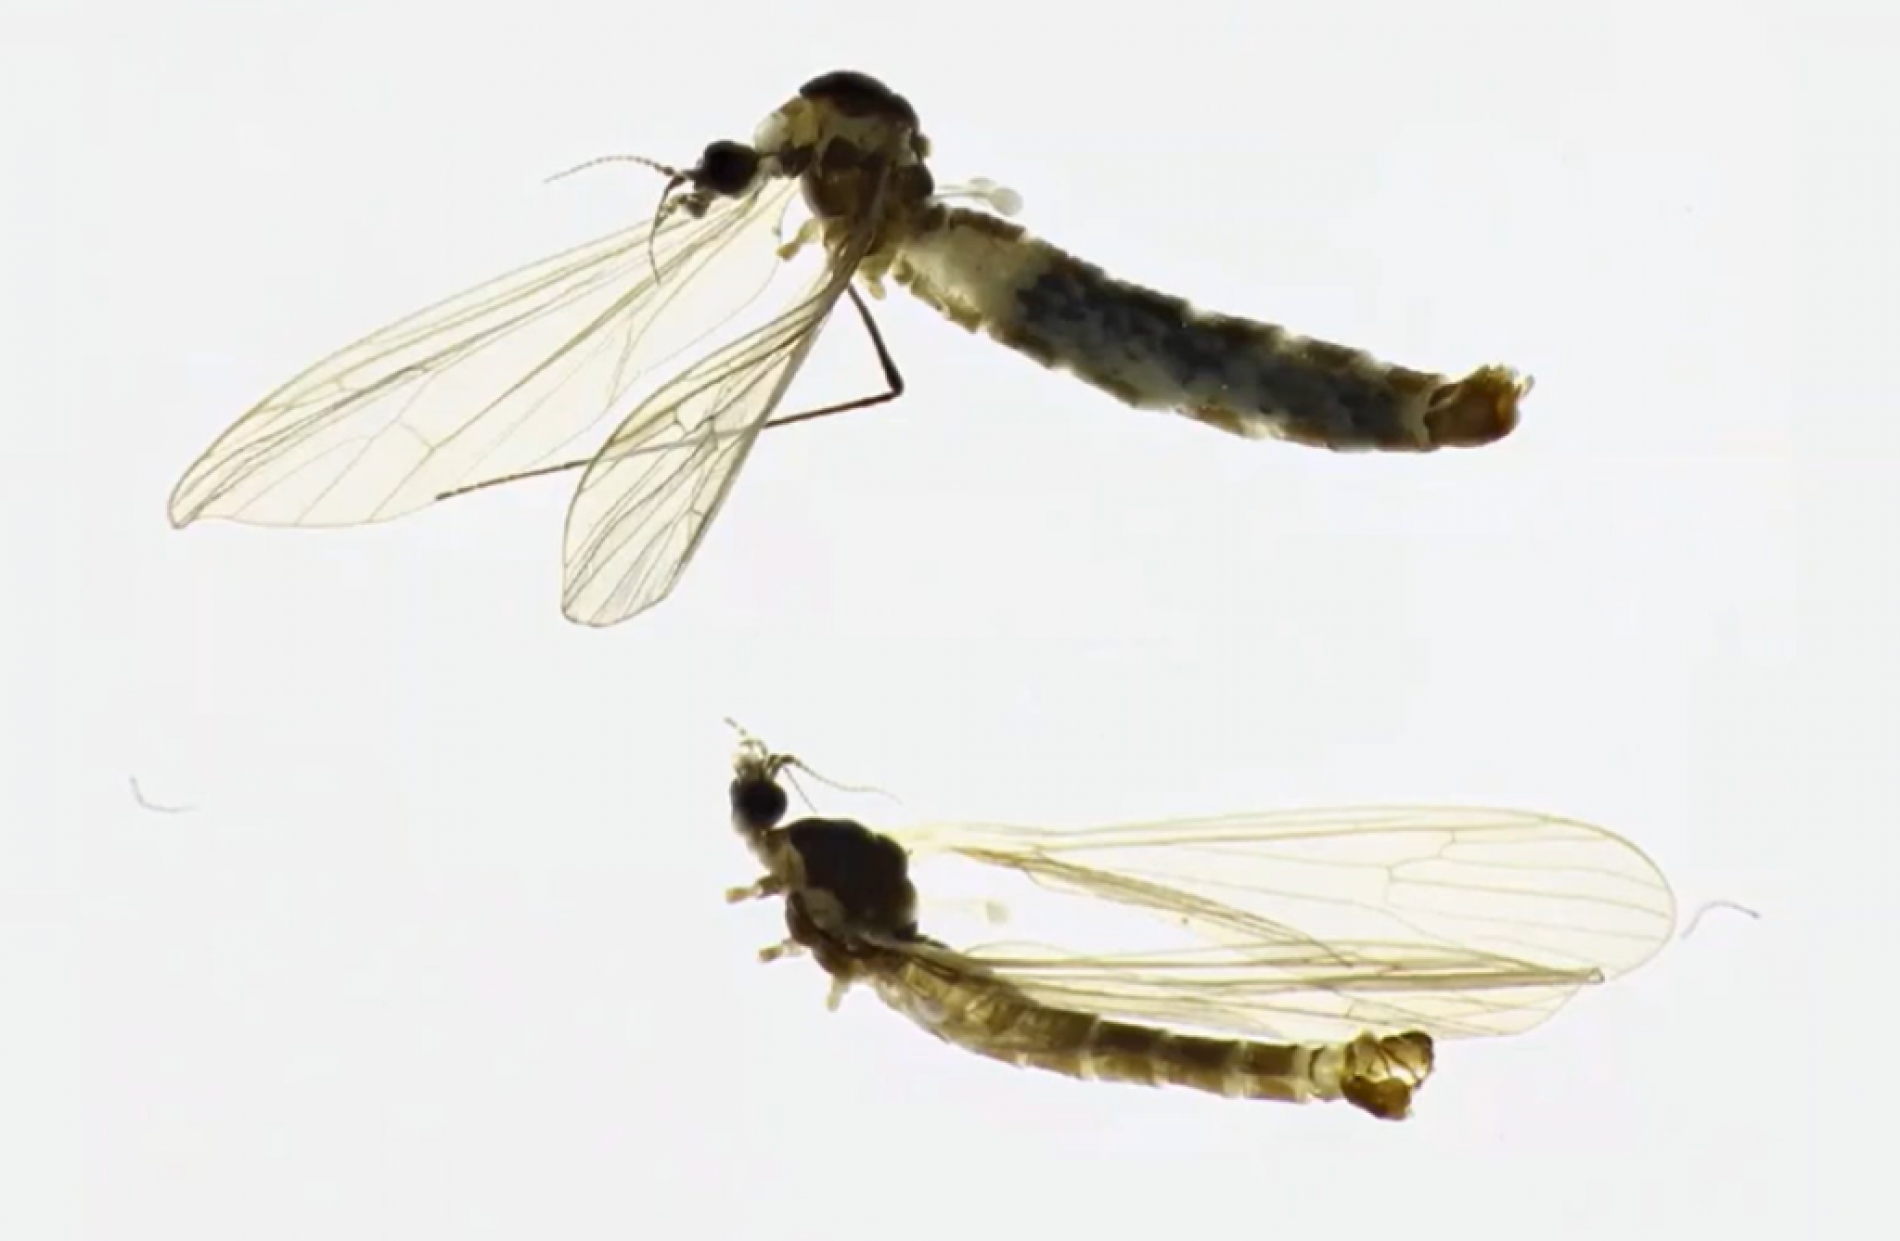 U Neretvi otkrivene nove vrste, potvrđen insekt nazvan ‘Baeoura neretvaensis’